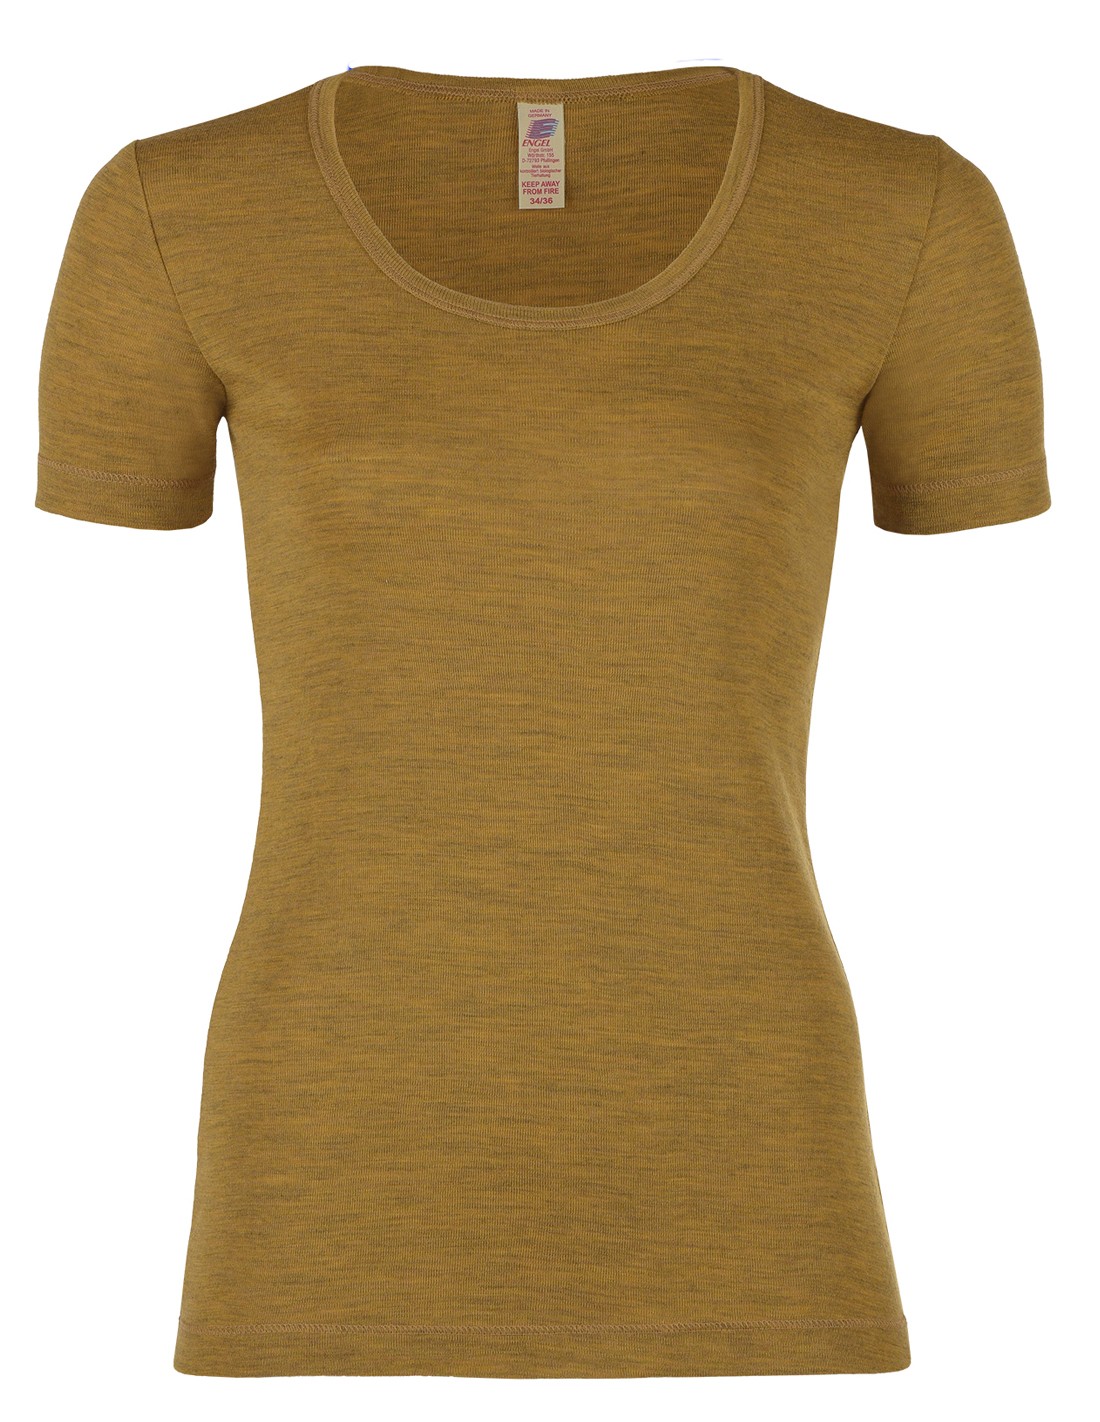 Image of Dames T-Shirt Merino Wol Engel Natur, Kleur Safraan, Maat 46/48 - Extra Large